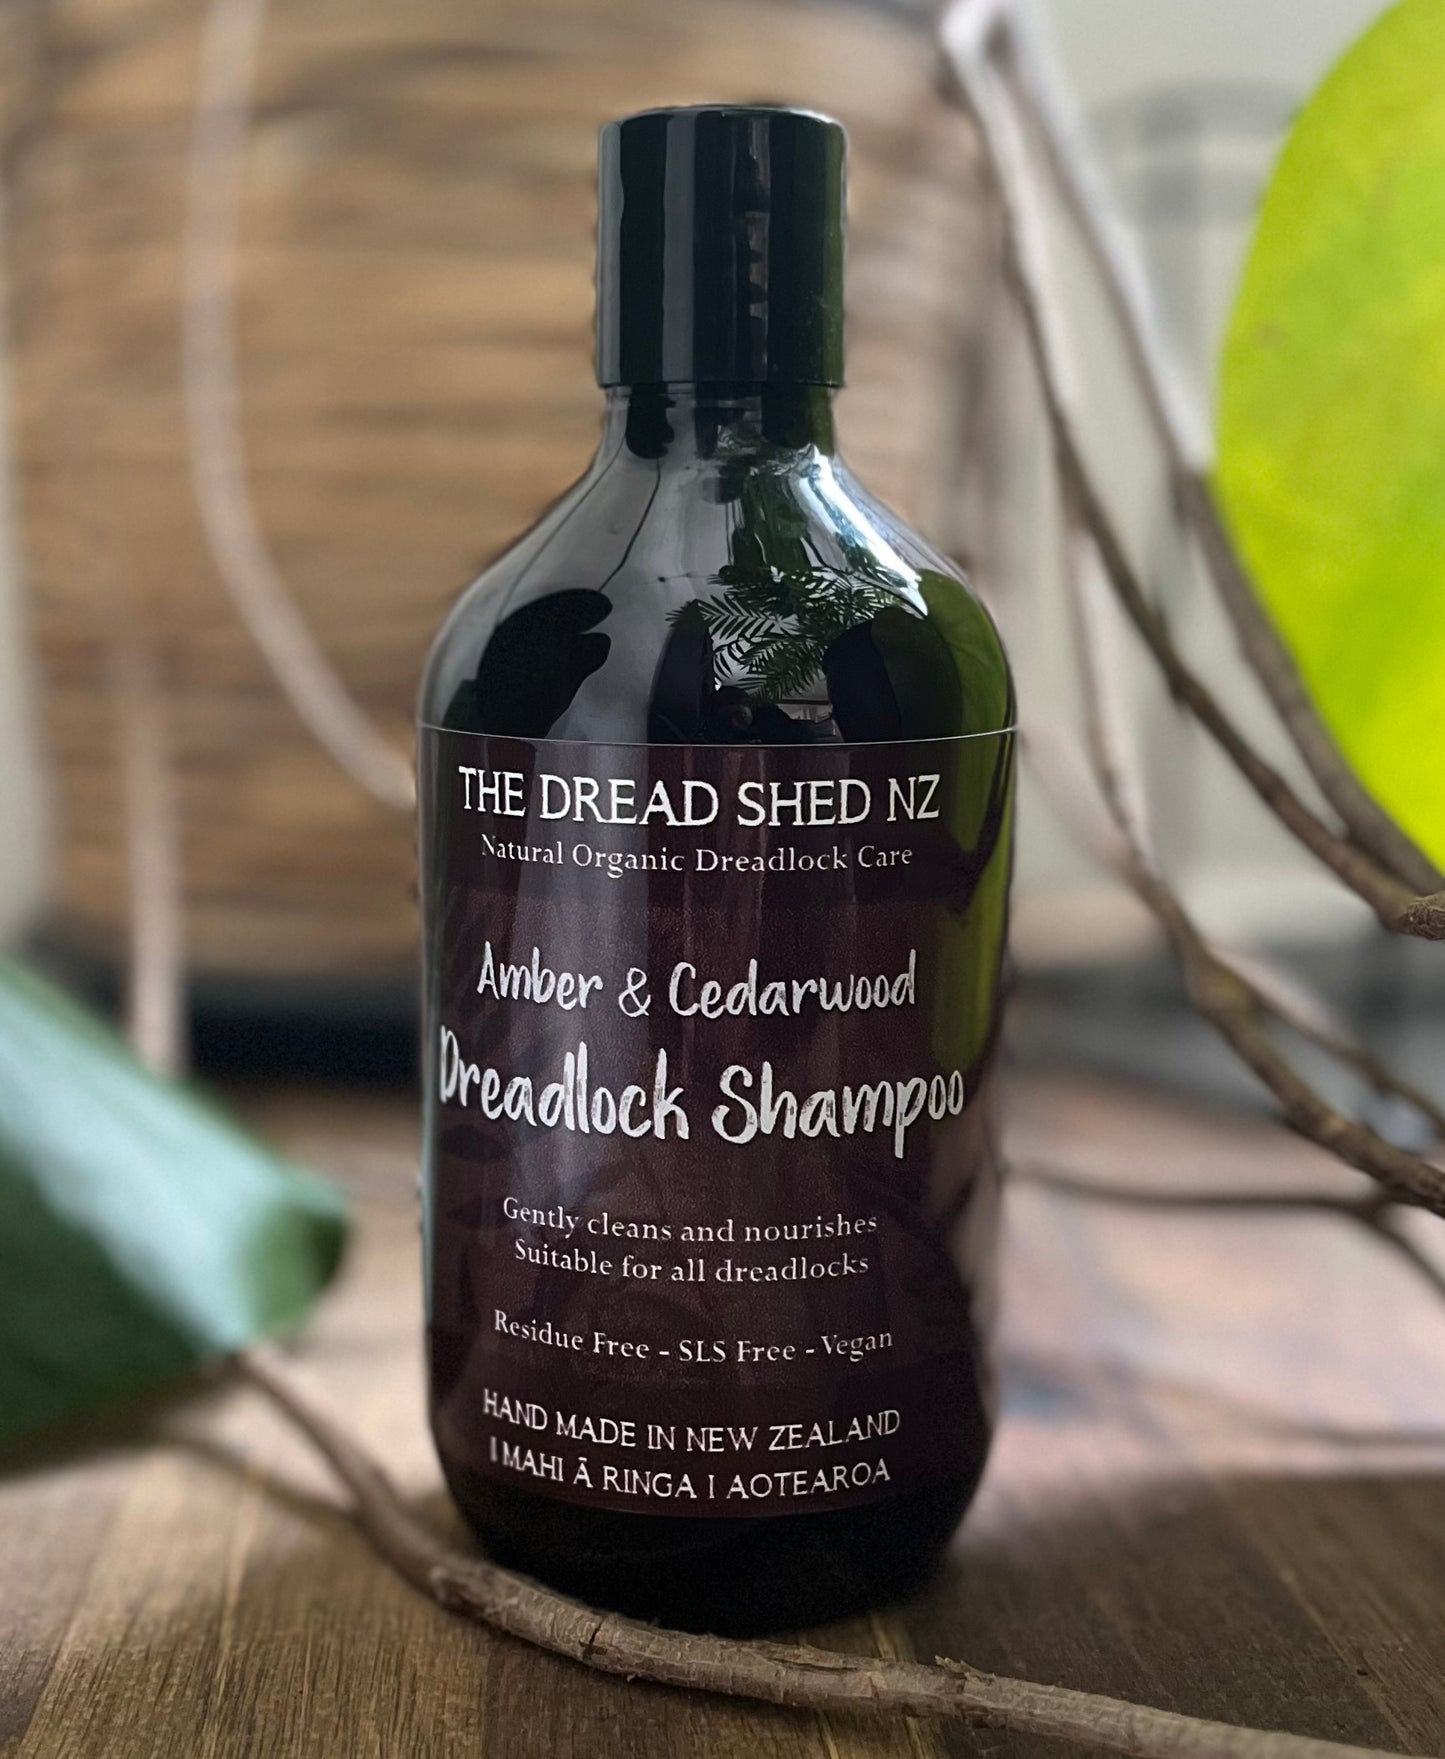 Amber & Cedarwood Dreadlock Shampoo